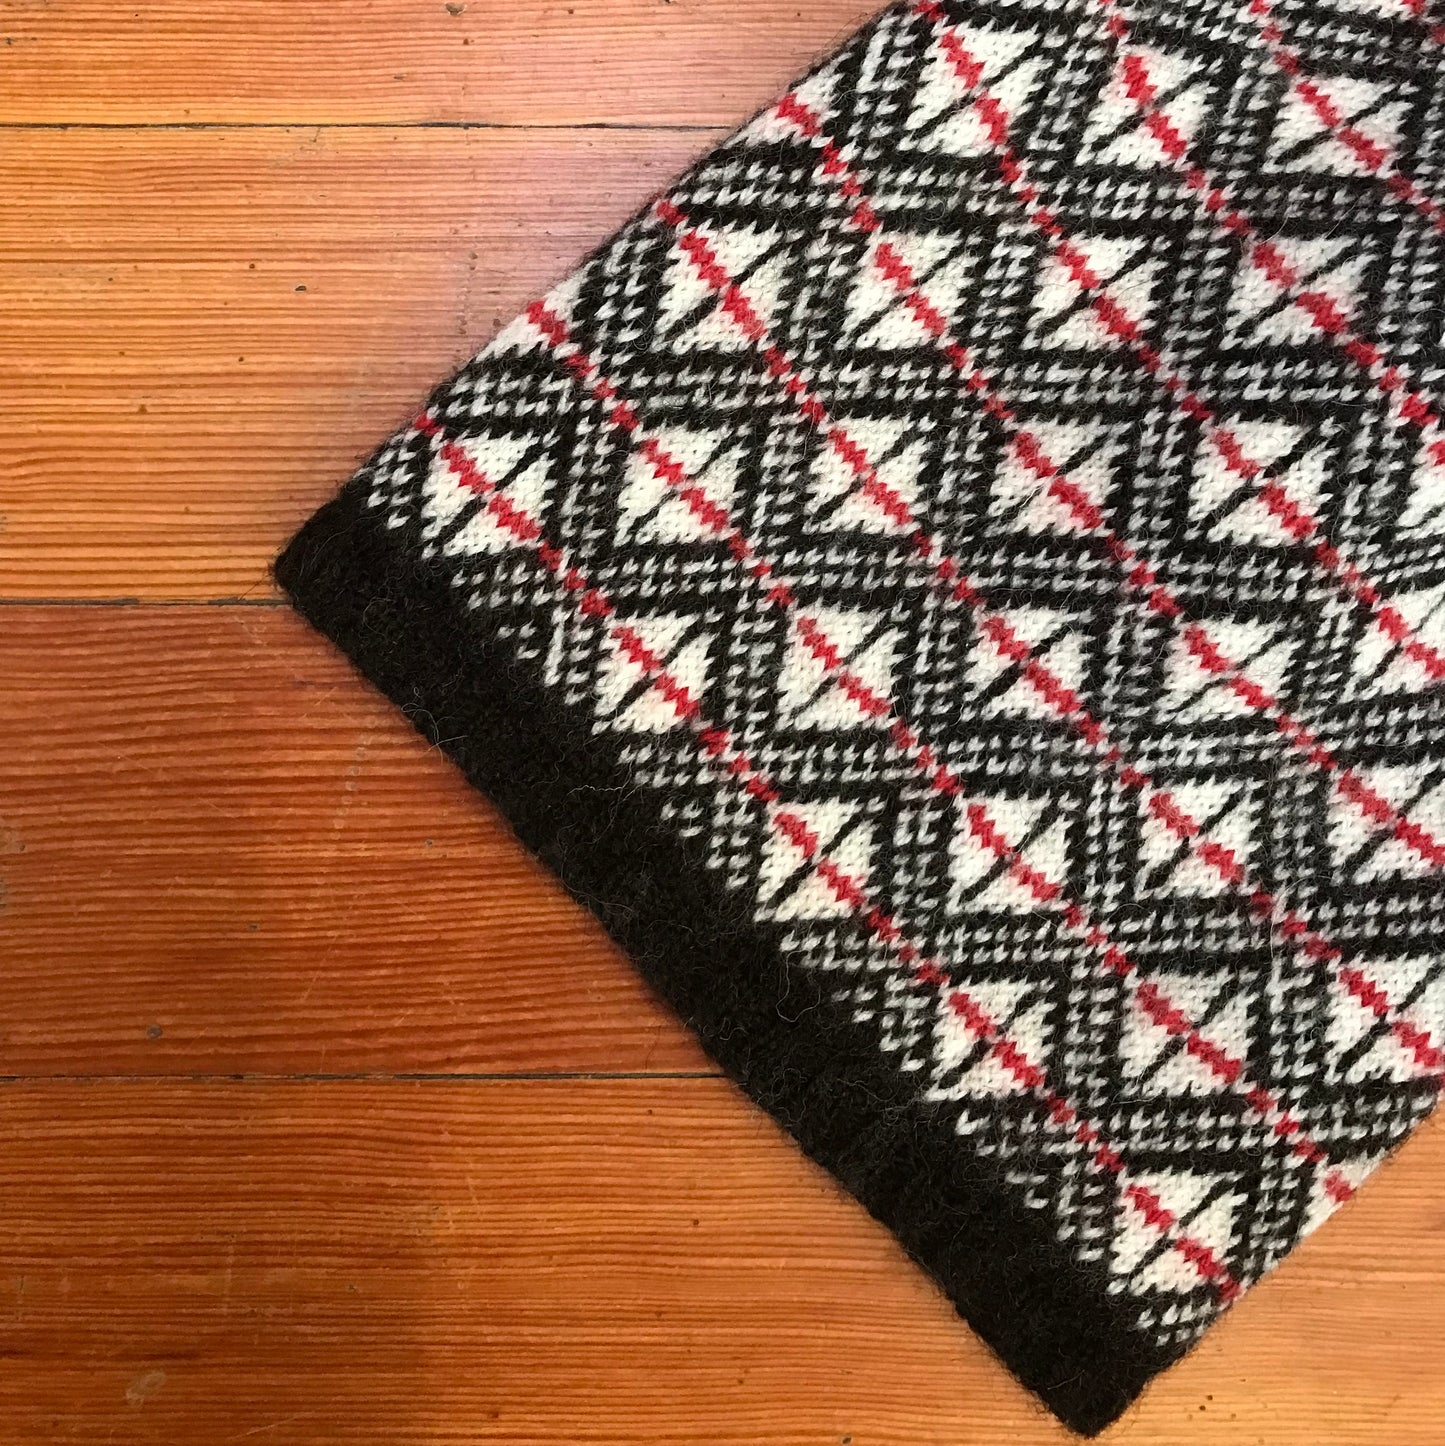 Knitting Jenny Pattern 31: Fair Isle Inspired Fisherman’s Kep and Design Workbook